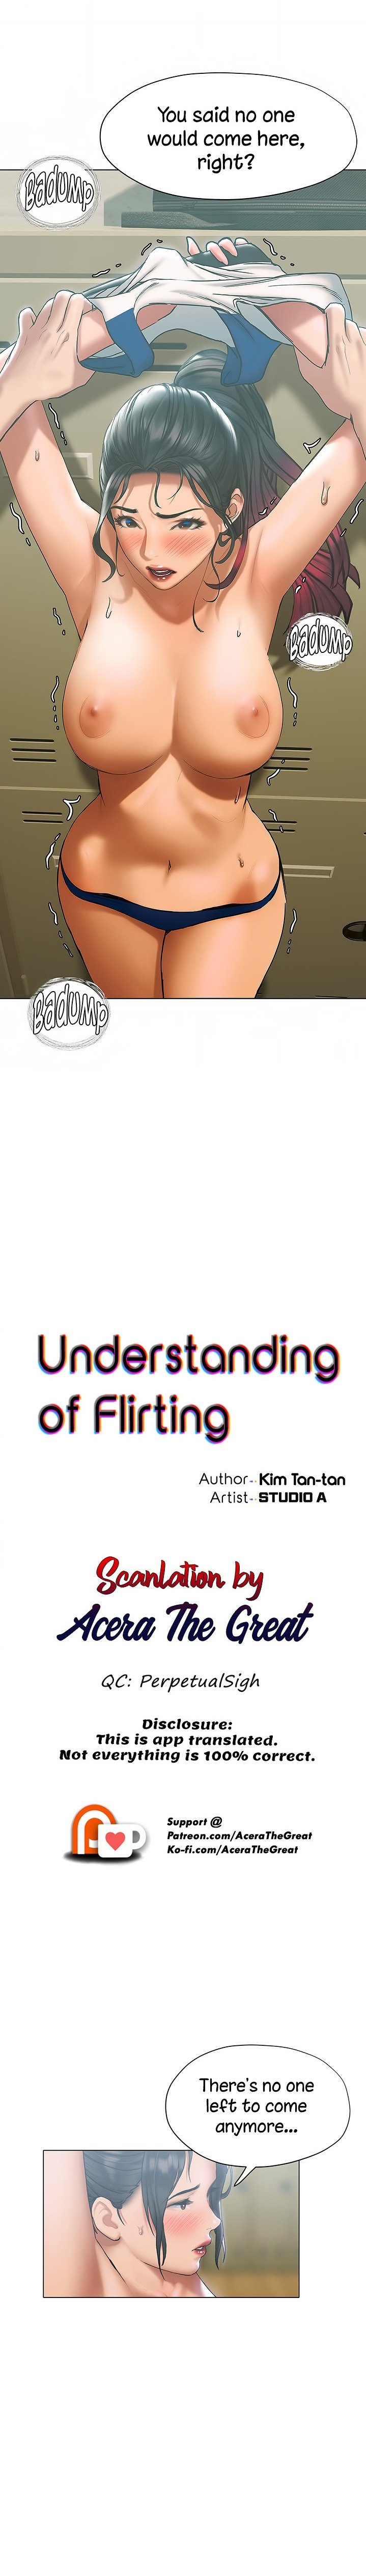 understanding-of-flirting-001-chap-23-1